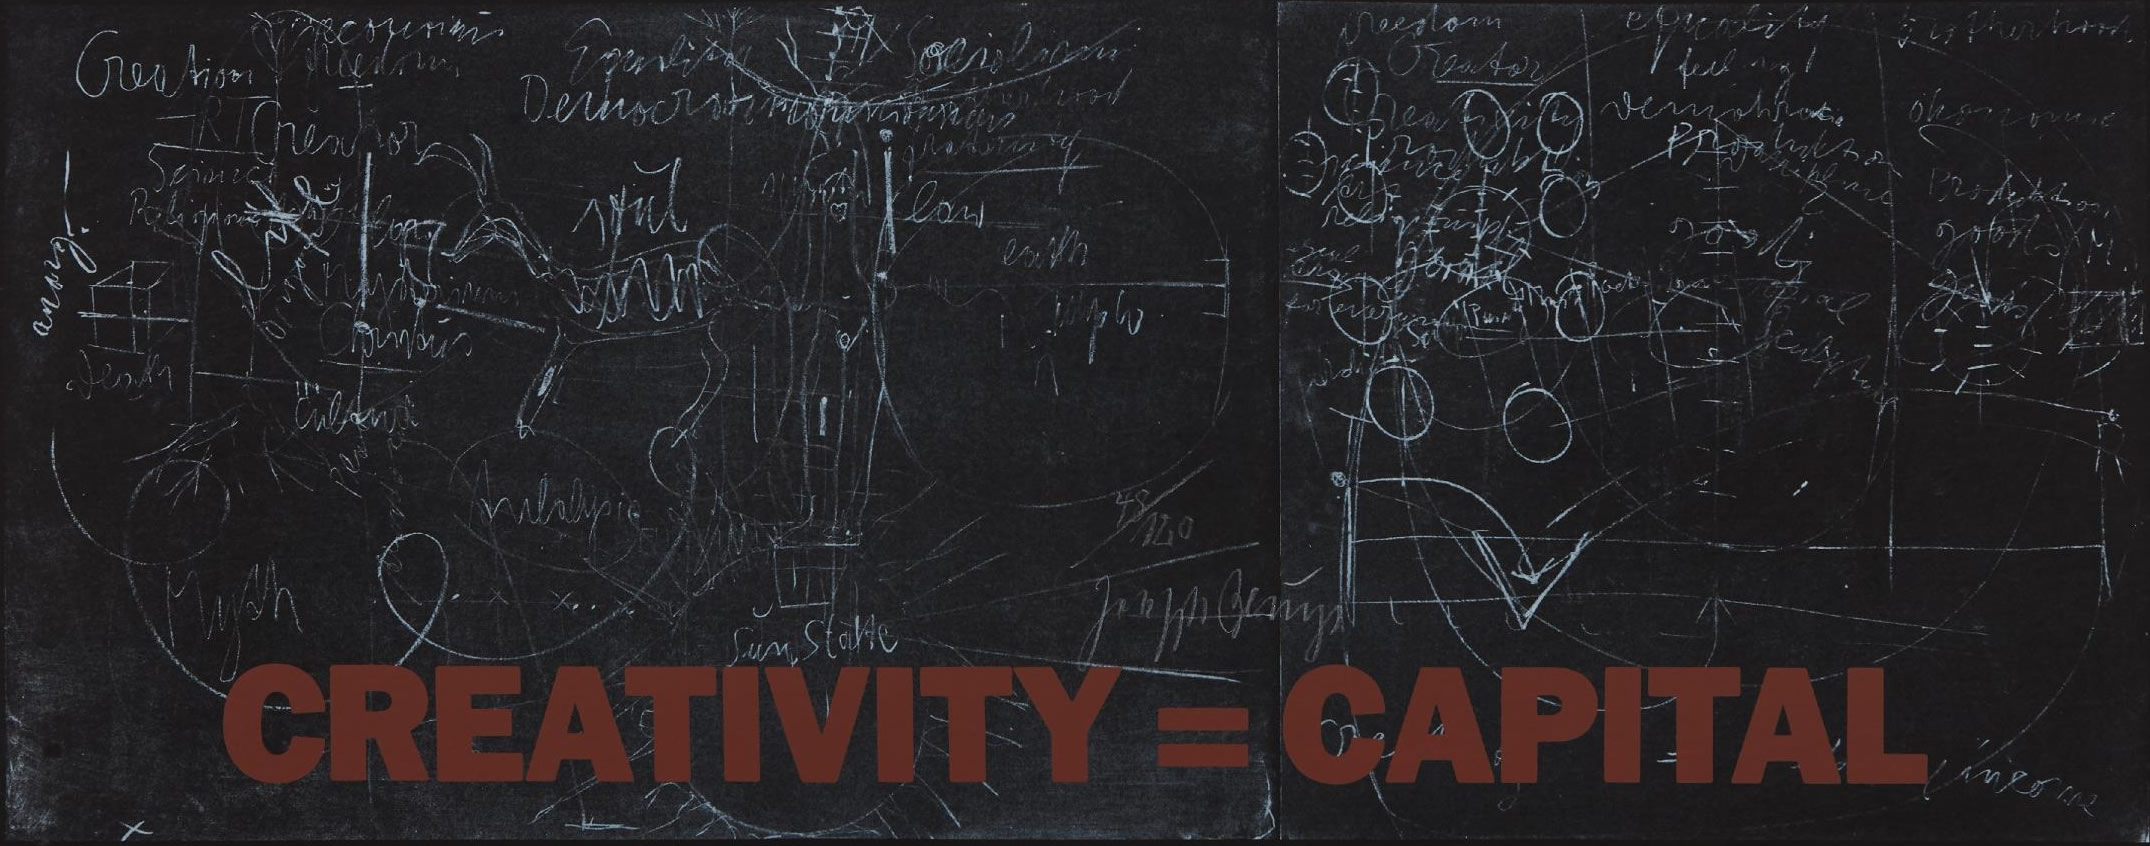 Joseph Beuys: Creativity = Capital. New York Subway Poster. 1983